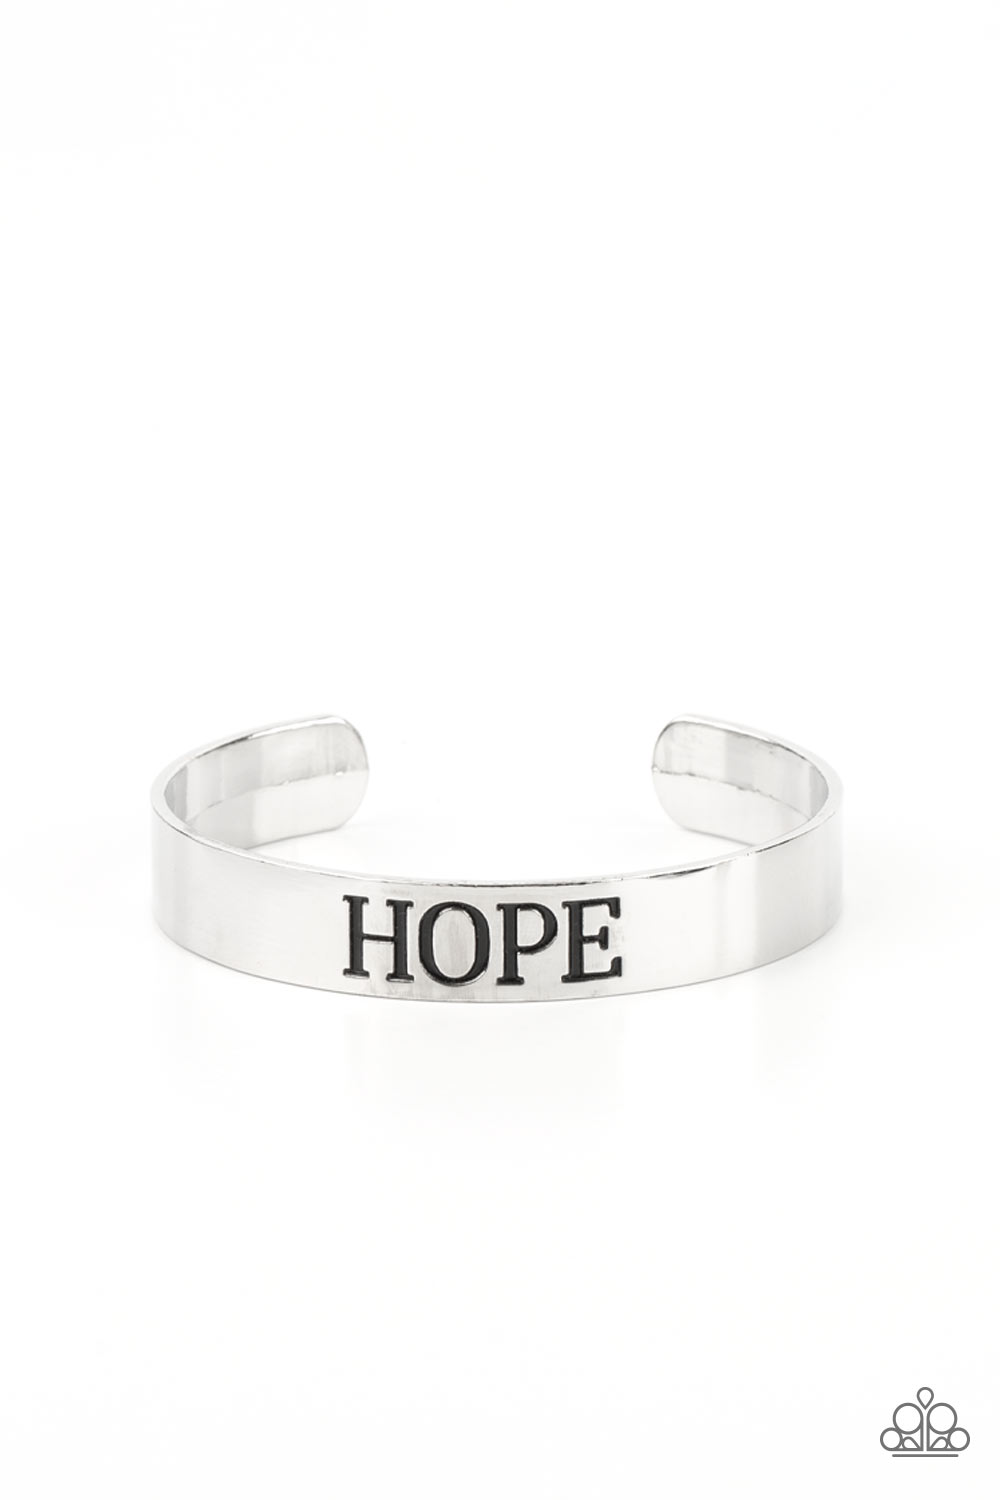 Paparazzi Bracelet - Hope Makes The World Go Round - Silver